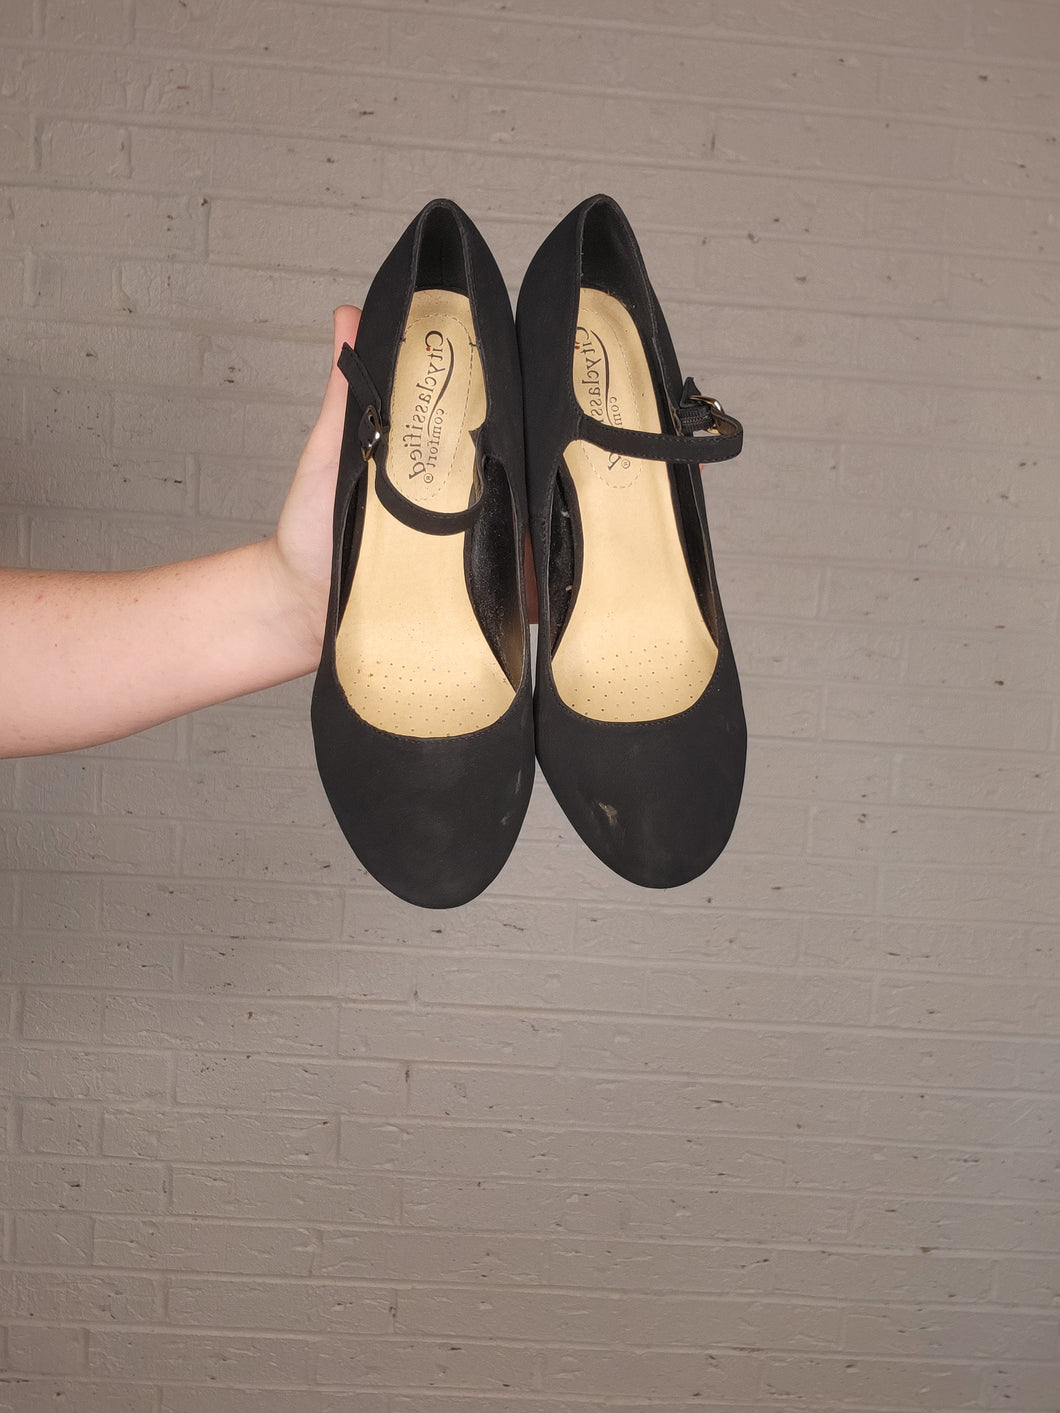 Size 9 - Classic Black Heels